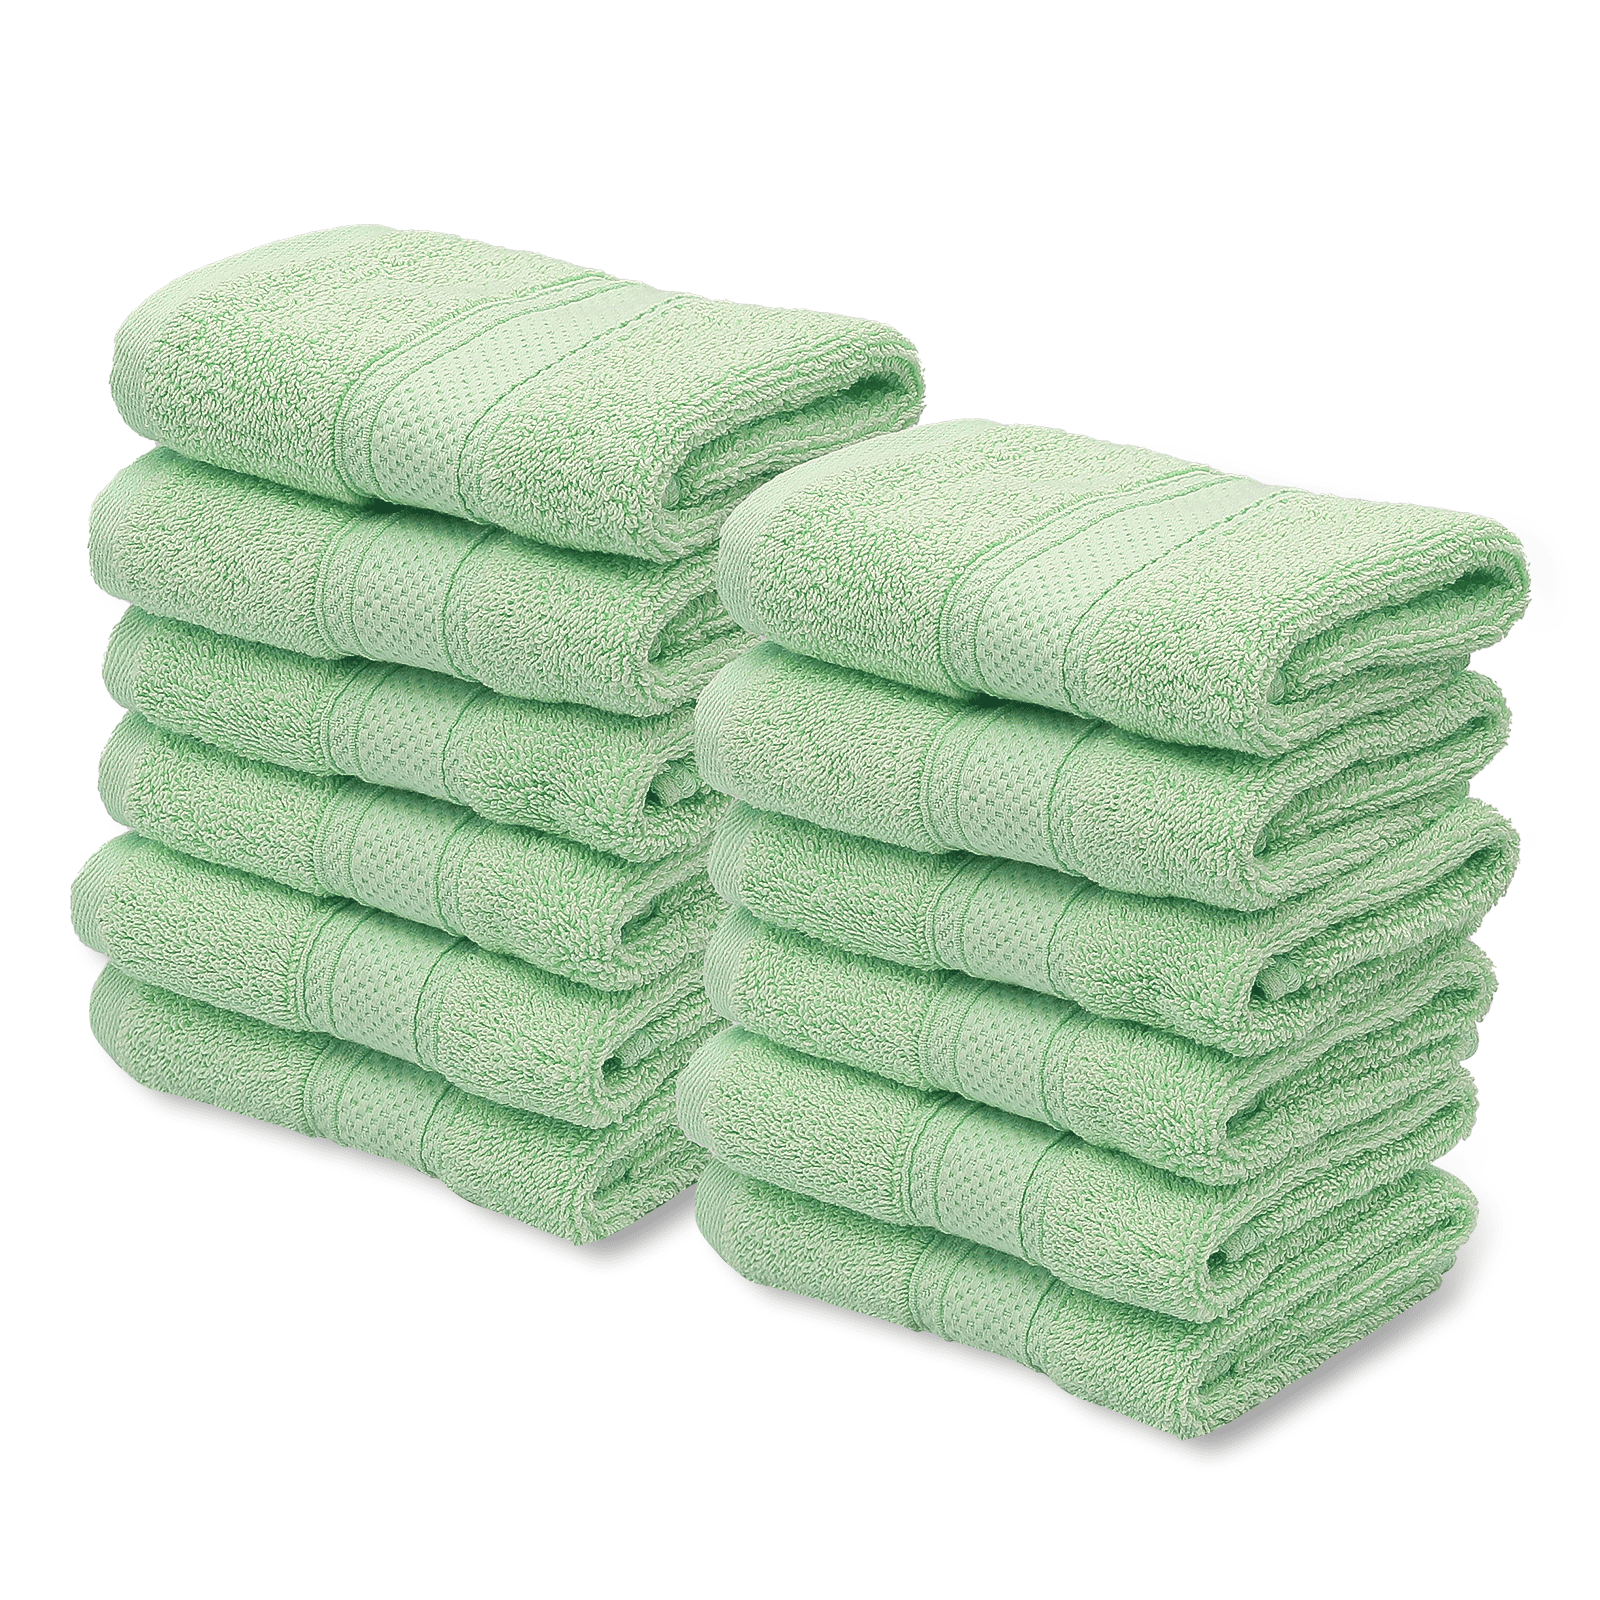 MoNiBloom 8Pcs Bath Towel Set, 100% Cotton Super Soft, 2 Bath Towels, 2  Hand Towels and 4 Washcloths for Bathroom, Machine Washable, Gray 